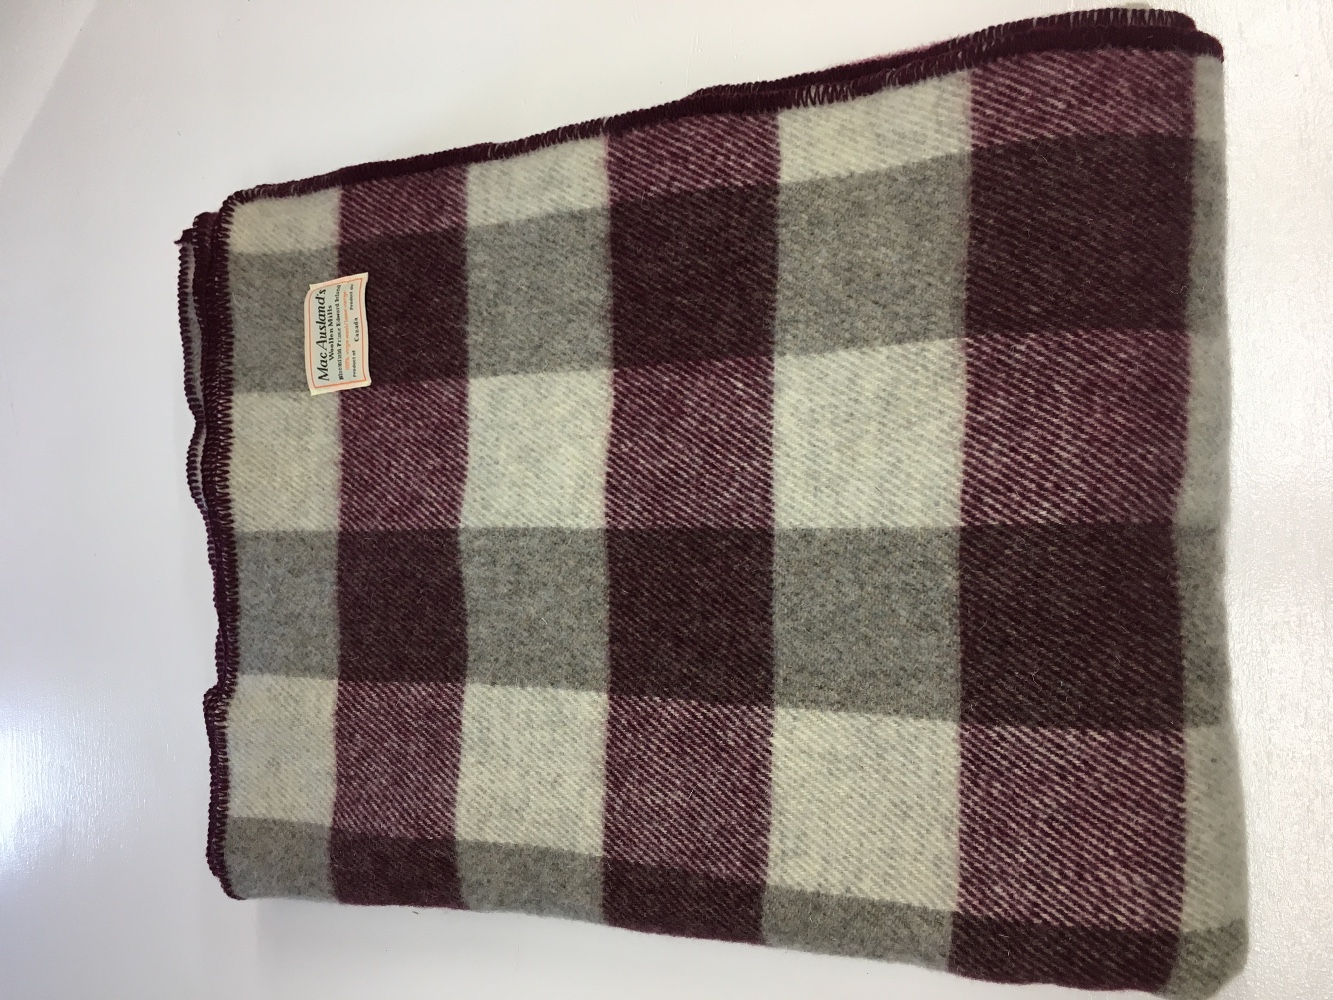 Blankets (checkerboard pattern) - MacAuslands Woolen Mills, Bloomfield, PEI